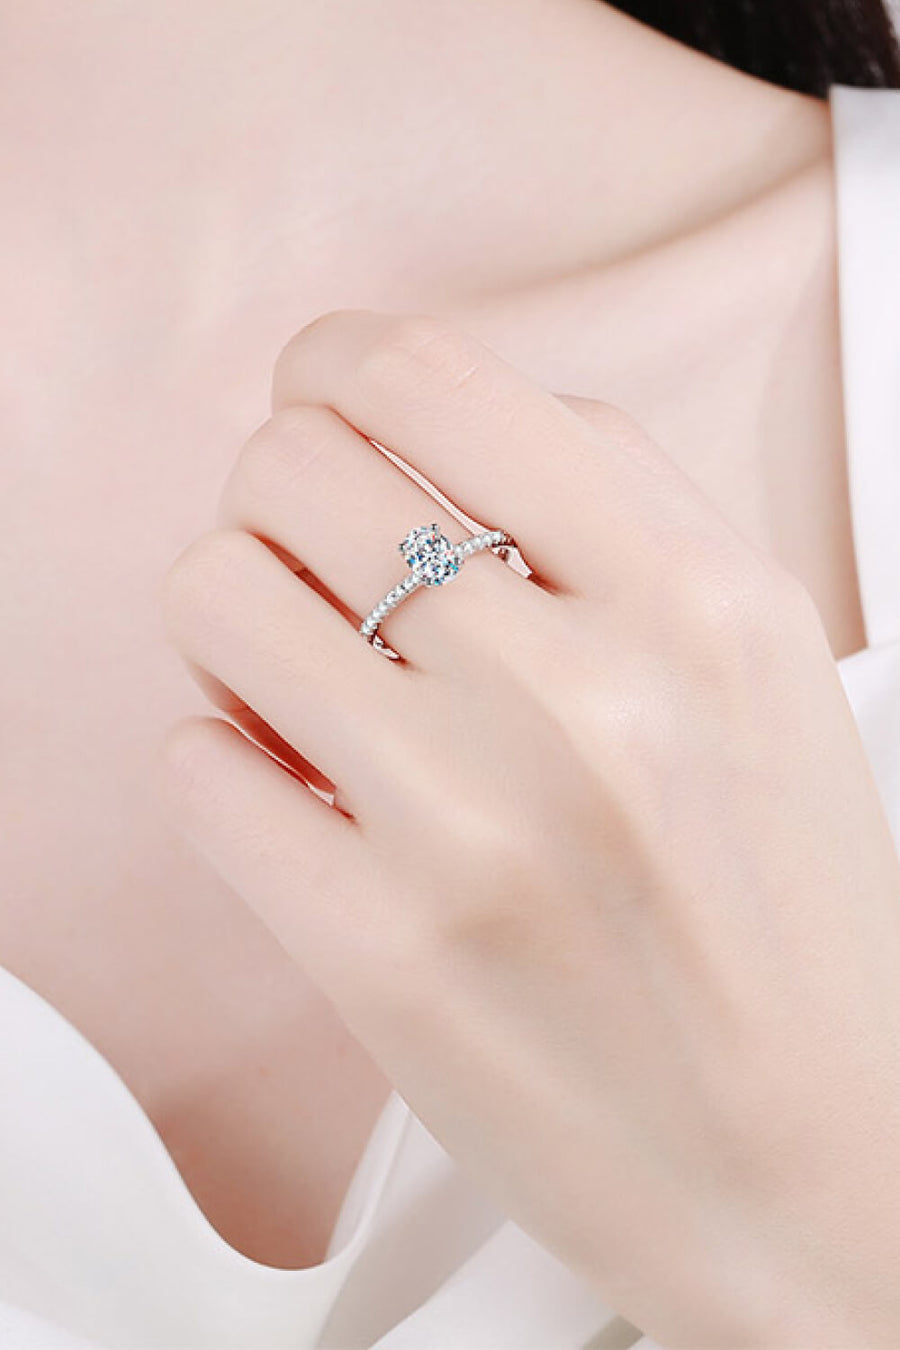 Best Diamond Ring Jewelry Gifts for Women | 1 Carat Oval Diamond Ring | MASON New York